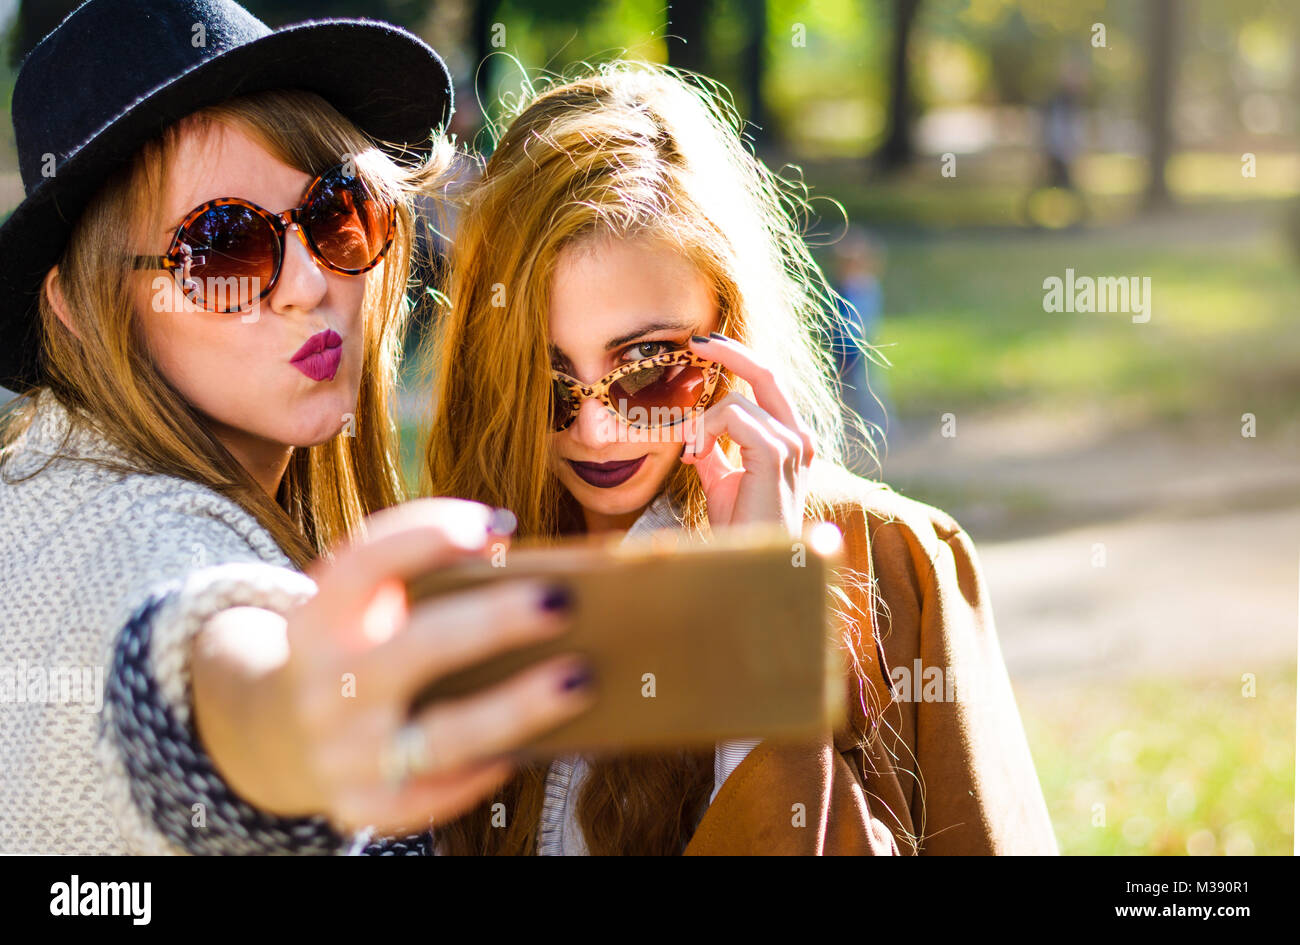 Urban girlfriends taking a selfie in the park Stock Photo